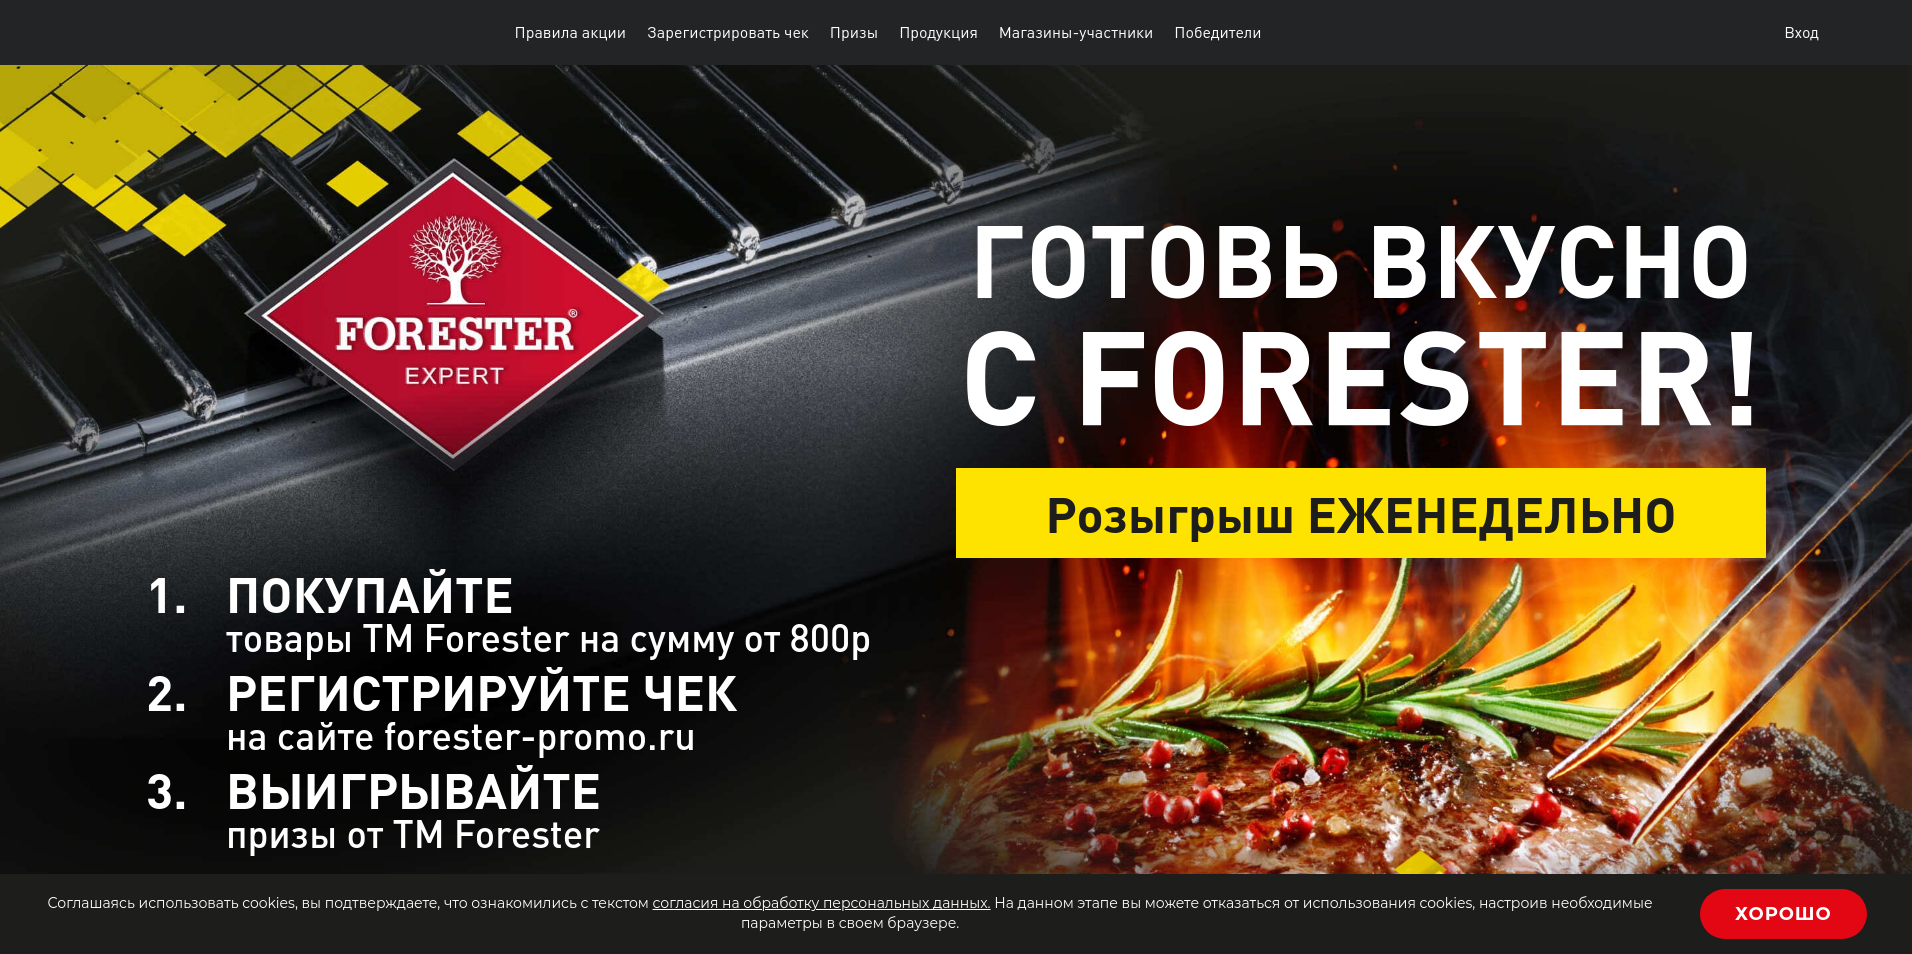 Миниатюра акции «Готовь вкусно с Forester!»